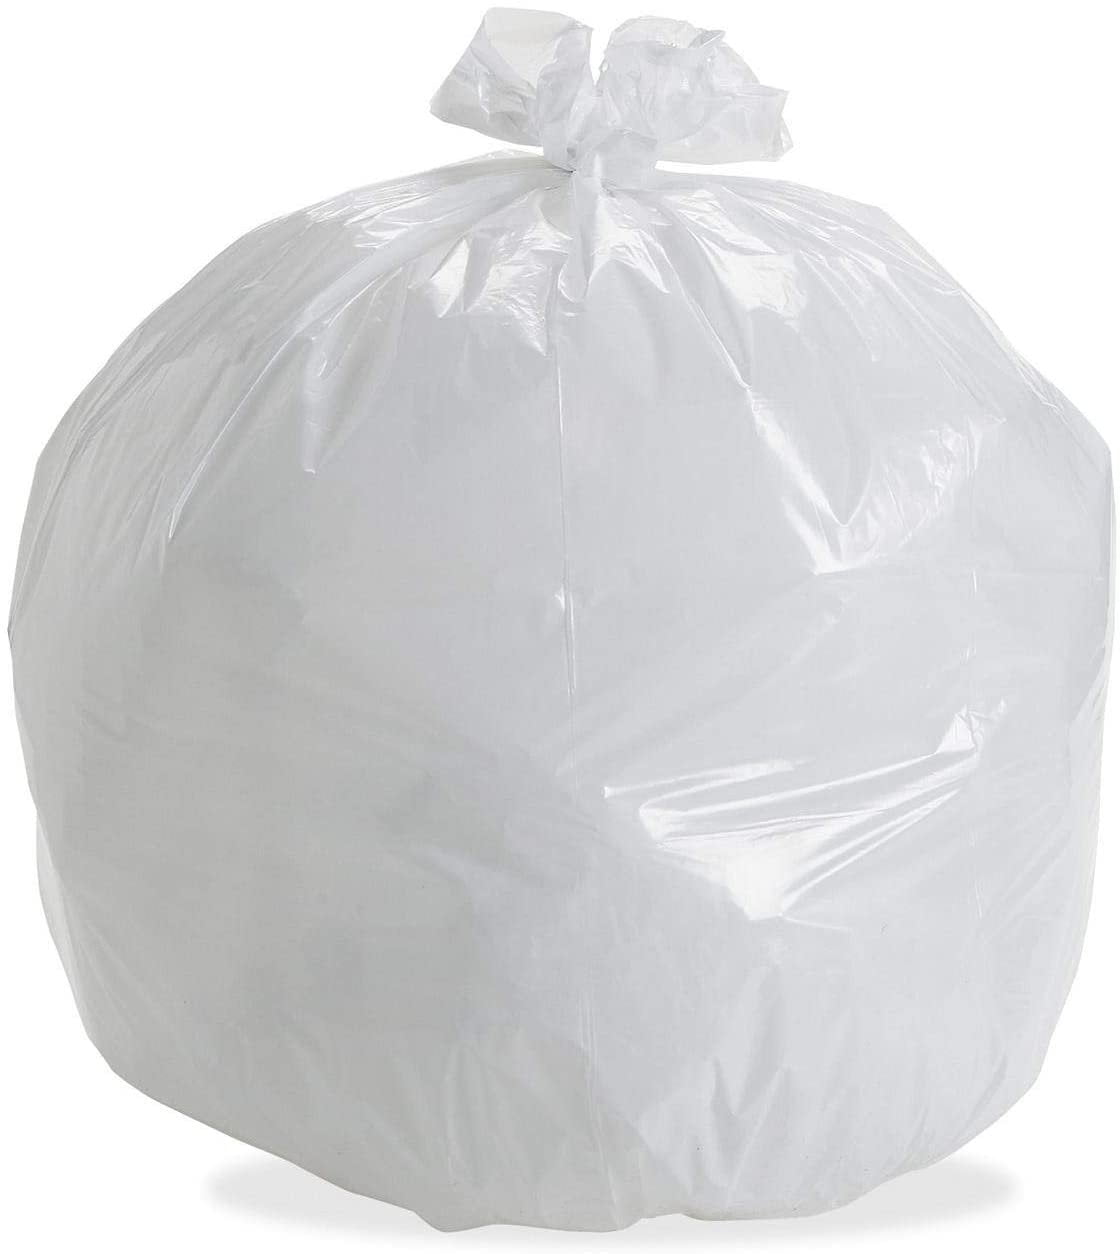 35 Gallon Garbage Bags, High Density: Clear, 16 Micron, 33x40, 100 Bags.